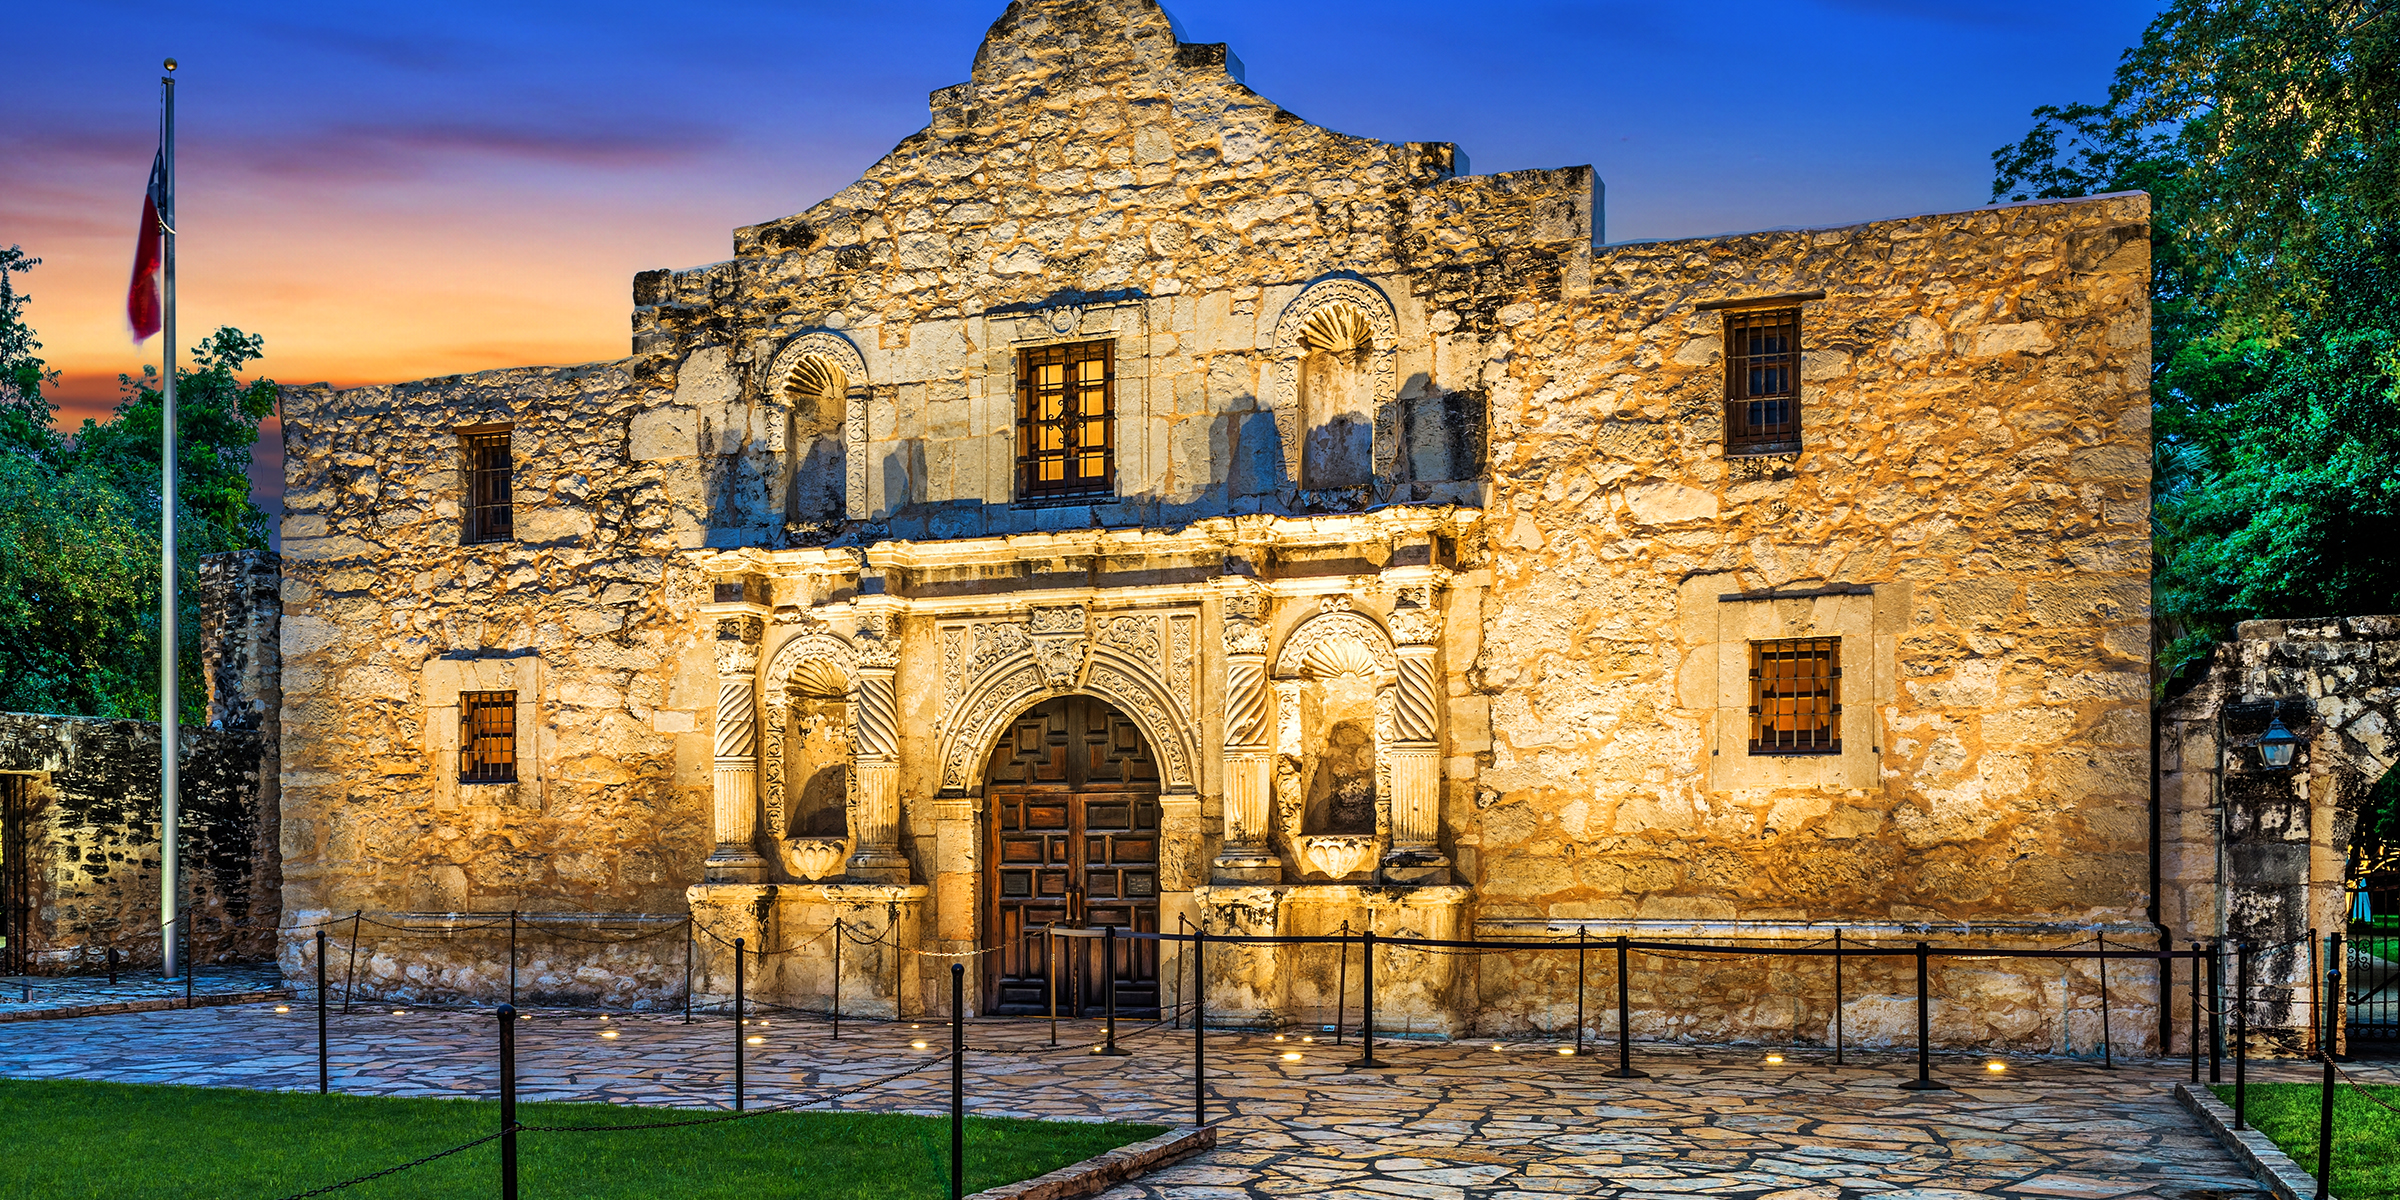 The Alamo in San Antonio, Texas | Source: Shutterstock